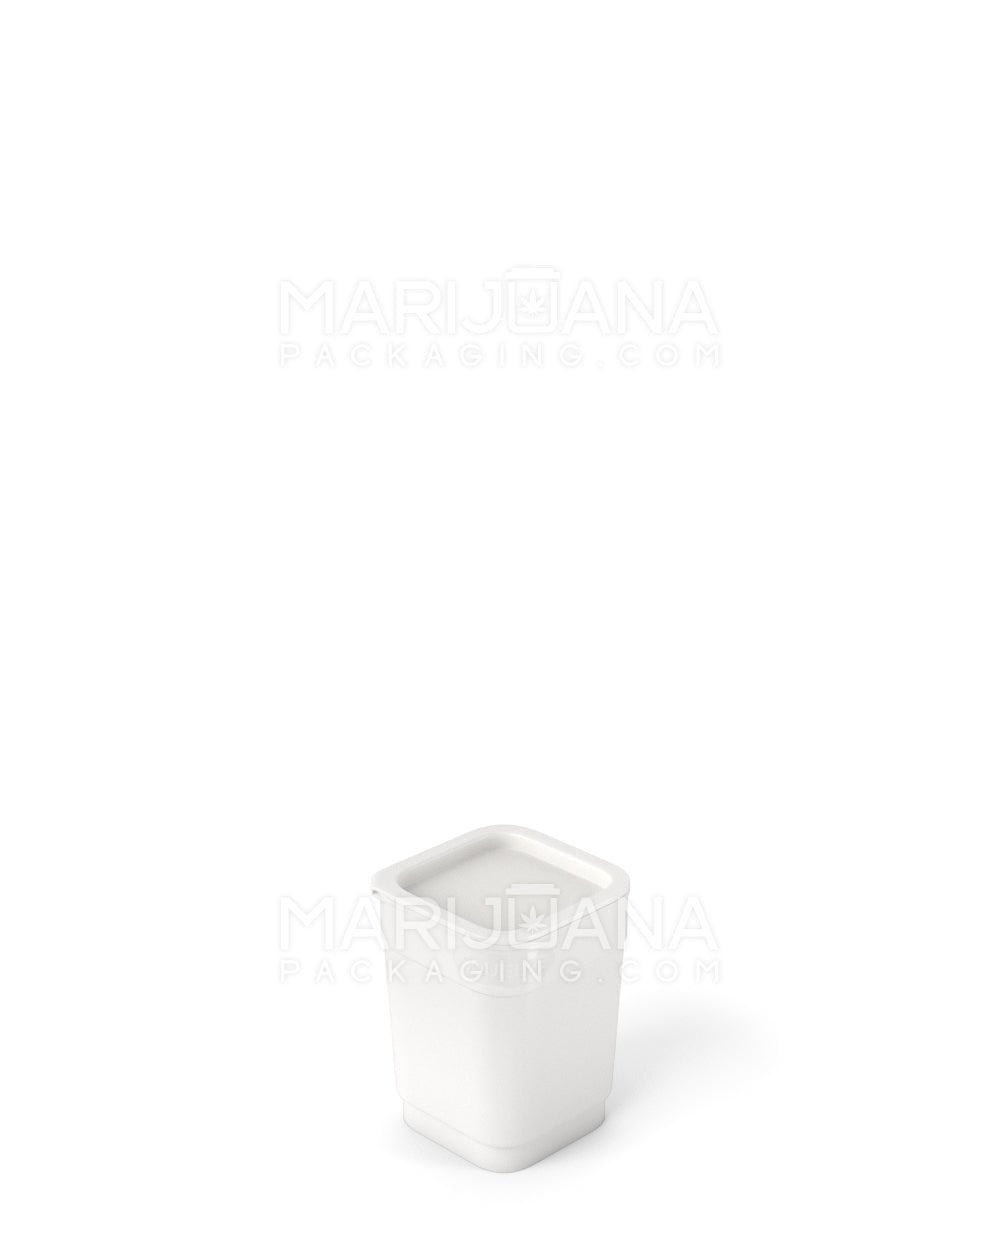 POLLEN GEAR | 100% Recyclable Opaque White Pop Box Pop Top Bottles | 6dr - 1g - 1632 Count - 5